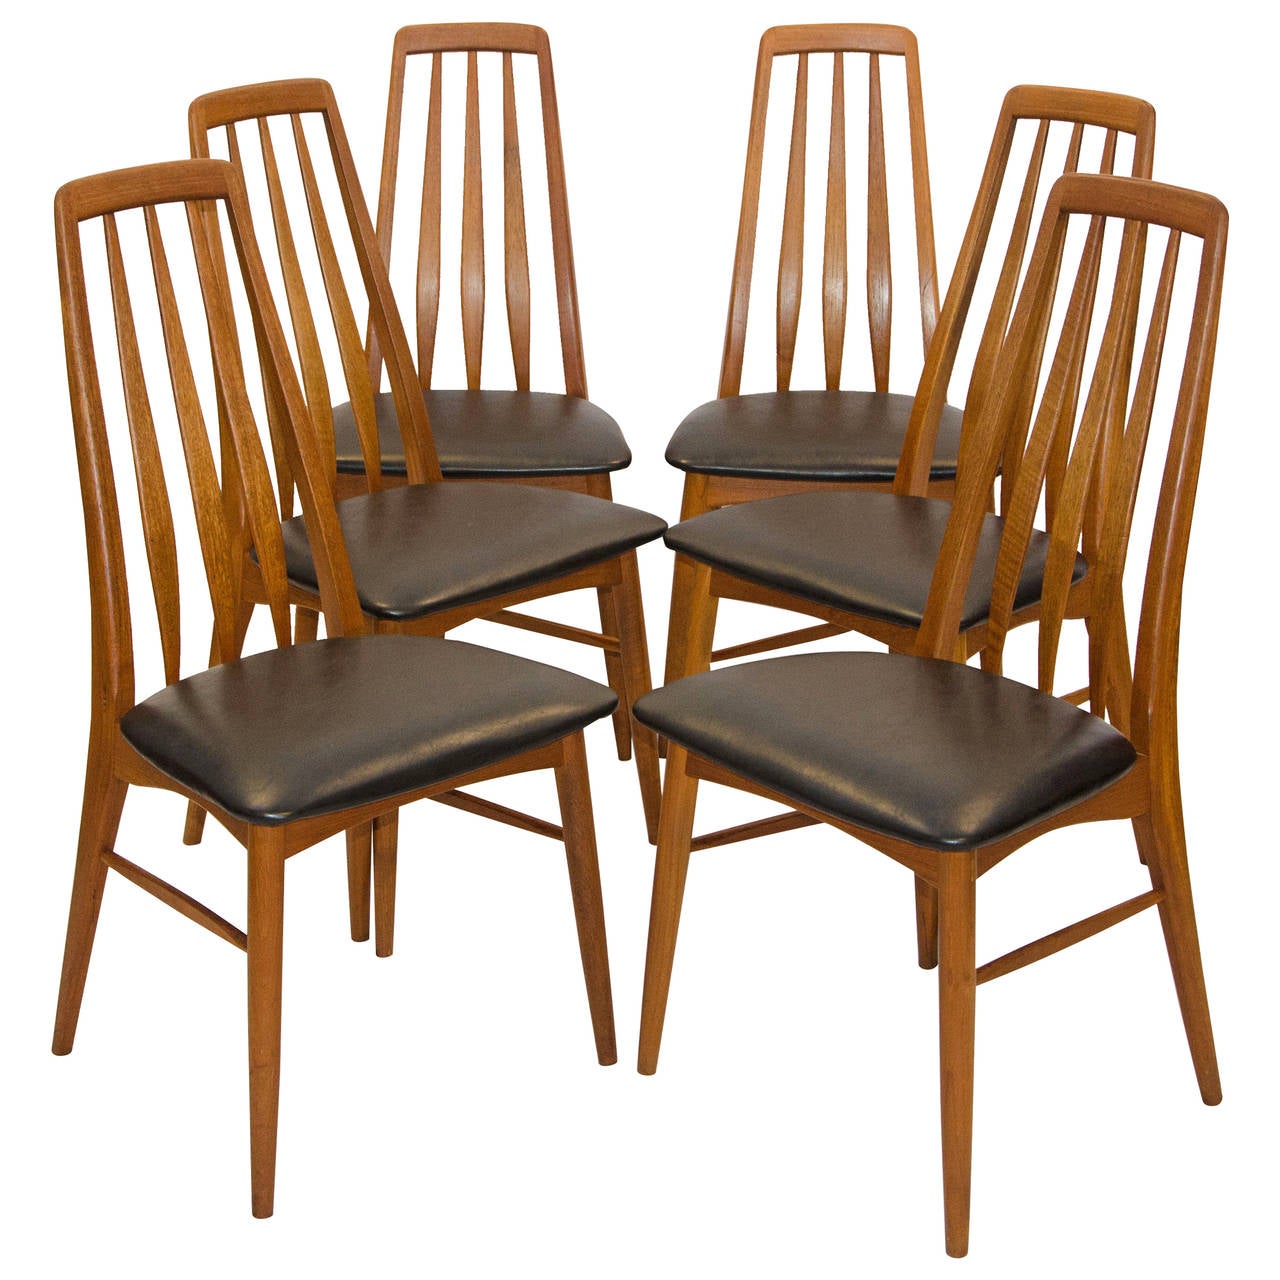 Six Danish Teak Dining Chairs, Koefoed Hornslet